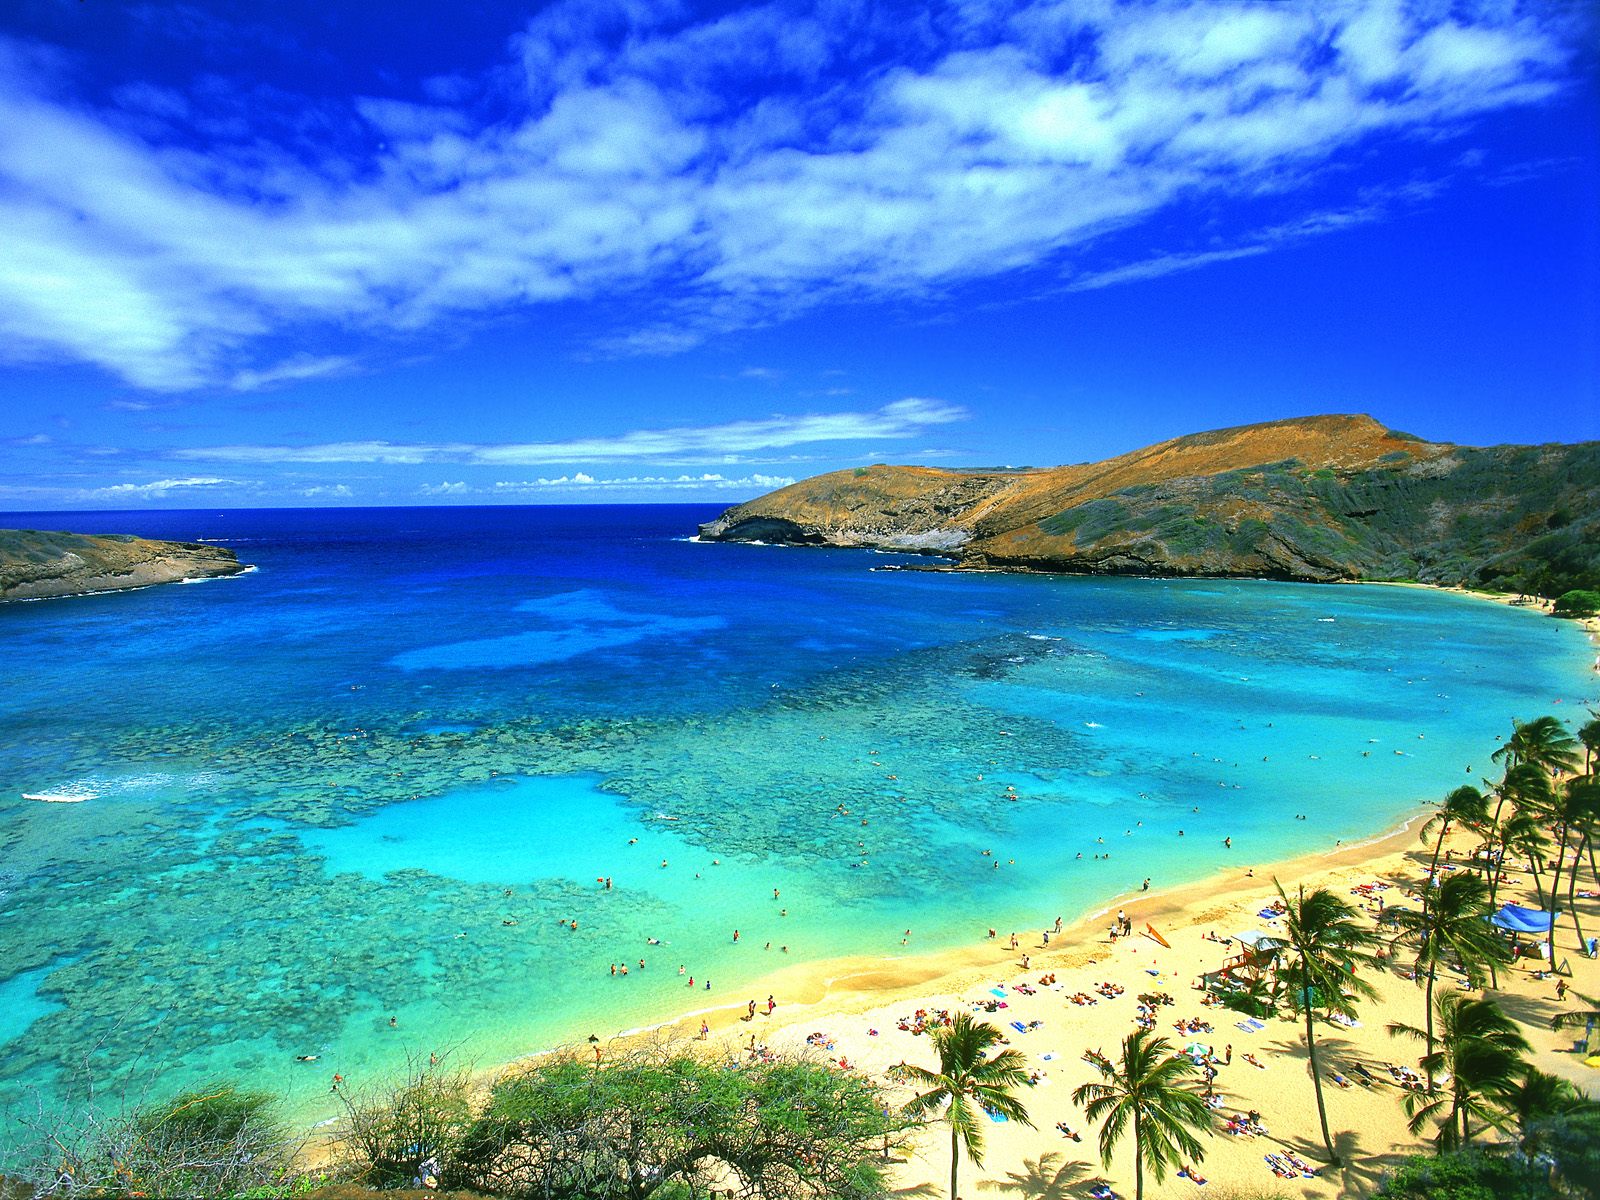  Oahu Hawaii   Canada Photography Desktop Wallpapers 10539 Views